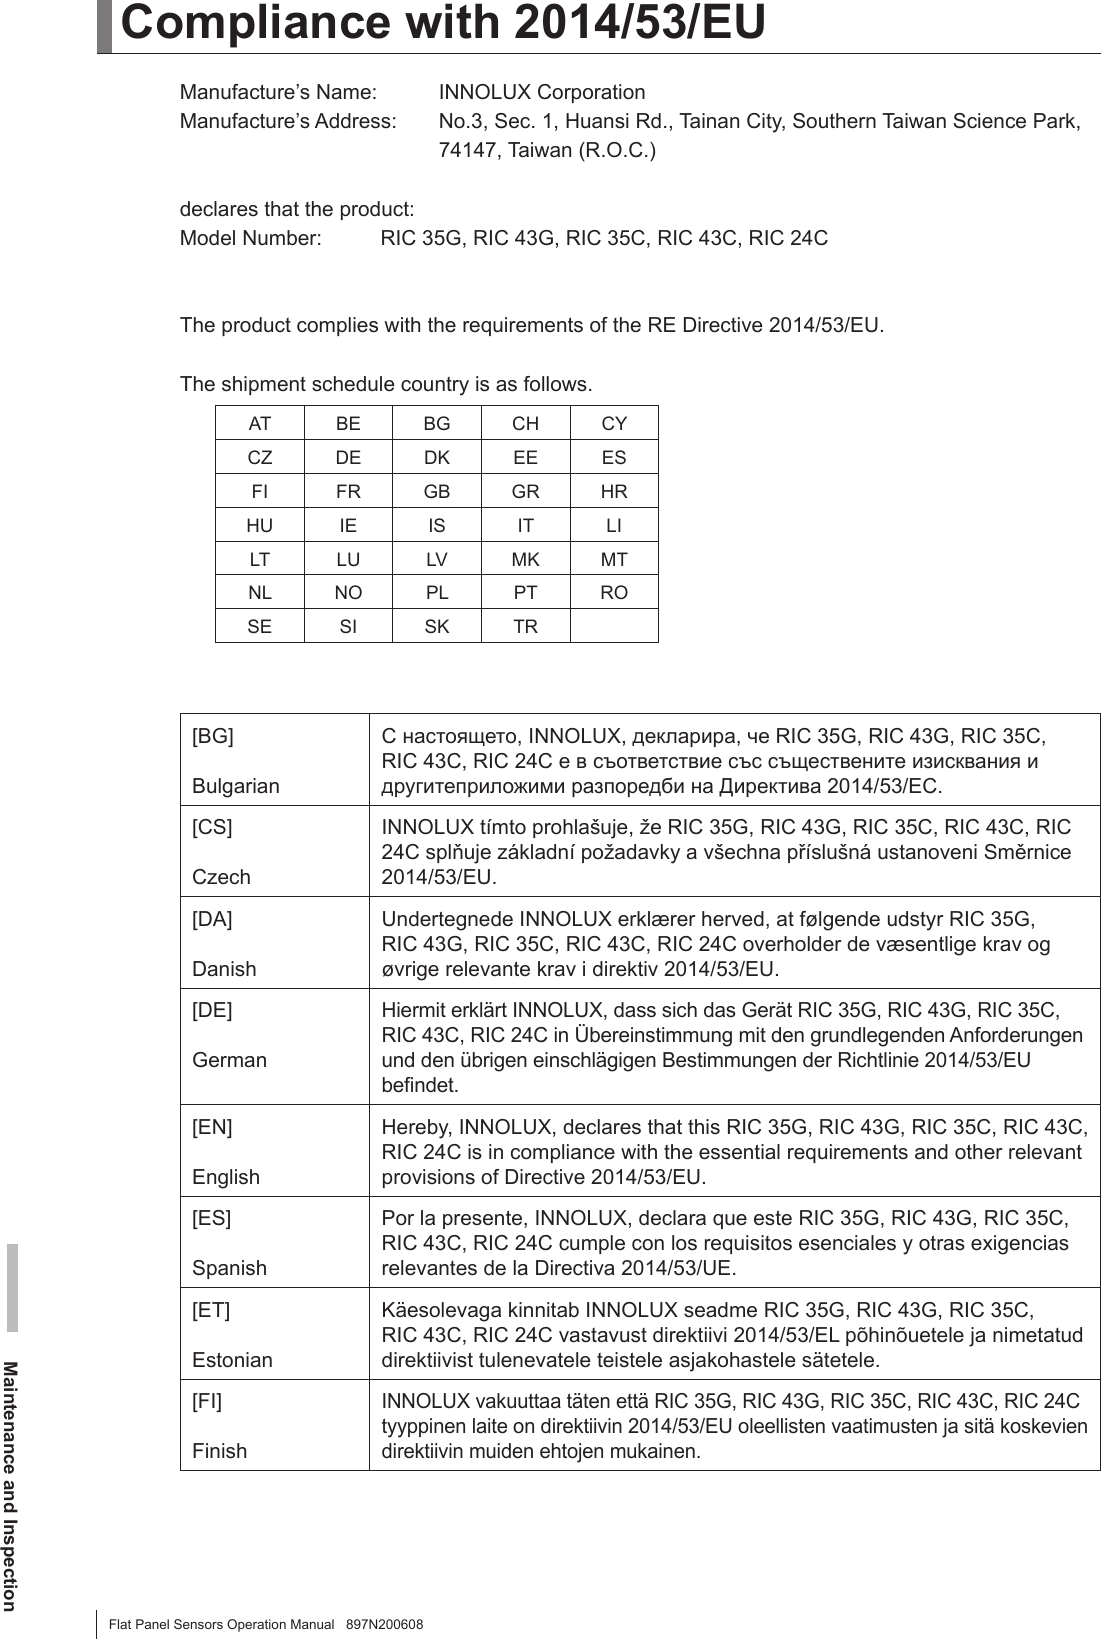 Maintenance and InspectionFlat Panel Sensors Operation Manual   897N200608Compliance with 2014/53/EUManufacture’s Name:  INNOLUX CorporationManufacture’s Address:   No.3, Sec. 1, Huansi Rd., Tainan City, Southern Taiwan Science Park, 74147, Taiwan (R.O.C.)declares that the product:Model Number:  RIC 35G, RIC 43G, RIC 35C, RIC 43C, RIC 24CThe product complies with the requirements of the RE Directive 2014/53/EU.The shipment schedule country is as follows.AT BE BG CH CYCZ DE DK EE ESFI FR GB GR HRHU IE IS IT LILT LU LV MK MTNL NO PL PT ROSE SI SK TR[BG]BulgarianС настоящето, INNOLUX, декларира, че RIC 35G, RIC 43G, RIC 35C,  RIC 43C, RIC 24C е в съответствие със съществените изисквания и другитеприложими разпоредби на Директива 2014/53/EC.[CS]CzechINNOLUX tímto prohlašuje, že RIC 35G, RIC 43G, RIC 35C, RIC 43C, RIC 24C splňuje základní požadavky a všechna příslušná ustanoveni Směrnice 2014/53/EU.[DA]DanishUndertegnede INNOLUX erklærer herved, at følgende udstyr RIC 35G,  RIC 43G, RIC 35C, RIC 43C, RIC 24C overholder de væsentlige krav og øvrige relevante krav i direktiv 2014/53/EU.[DE] GermanHiermit erklärt INNOLUX, dass sich das Gerät RIC 35G, RIC 43G, RIC 35C, RIC 43C, RIC 24C in Übereinstimmung mit den grundlegenden Anforderungen und den übrigen einschlägigen Bestimmungen der Richtlinie 2014/53/EU bendet.[EN]EnglishHereby, INNOLUX, declares that this RIC 35G, RIC 43G, RIC 35C, RIC 43C, RIC 24C is in compliance with the essential requirements and other relevant provisions of Directive 2014/53/EU.[ES]SpanishPor la presente, INNOLUX, declara que este RIC 35G, RIC 43G, RIC 35C, RIC 43C, RIC 24C cumple con los requisitos esenciales y otras exigencias relevantes de la Directiva 2014/53/UE.[ET] EstonianKäesolevaga kinnitab INNOLUX seadme RIC 35G, RIC 43G, RIC 35C,  RIC 43C, RIC 24C vastavust direktiivi 2014/53/EL põhinõuetele ja nimetatud direktiivist tulenevatele teistele asjakohastele sätetele.[FI]FinishINNOLUX vakuuttaa täten että RIC 35G, RIC 43G, RIC 35C, RIC 43C, RIC 24C tyyppinen laite on direktiivin 2014/53/EU oleellisten vaatimusten ja sitä koskevien direktiivin muiden ehtojen mukainen.